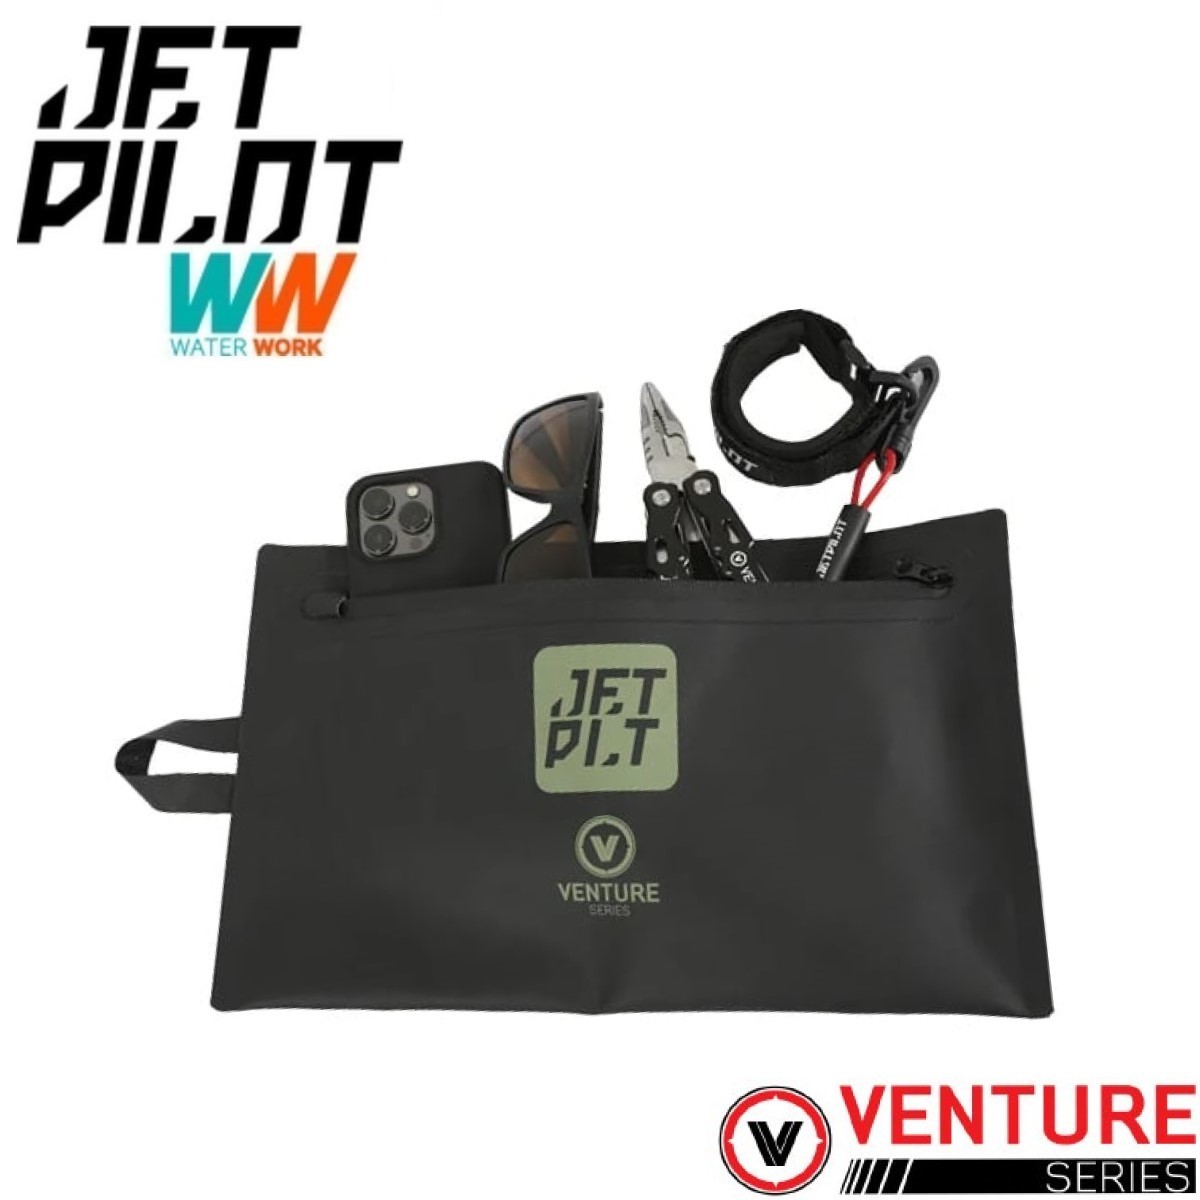  jet Pilot JETPILOT 2023 waterproof case postage 380 jpy venturess dry case ACS23907 black sea pool 